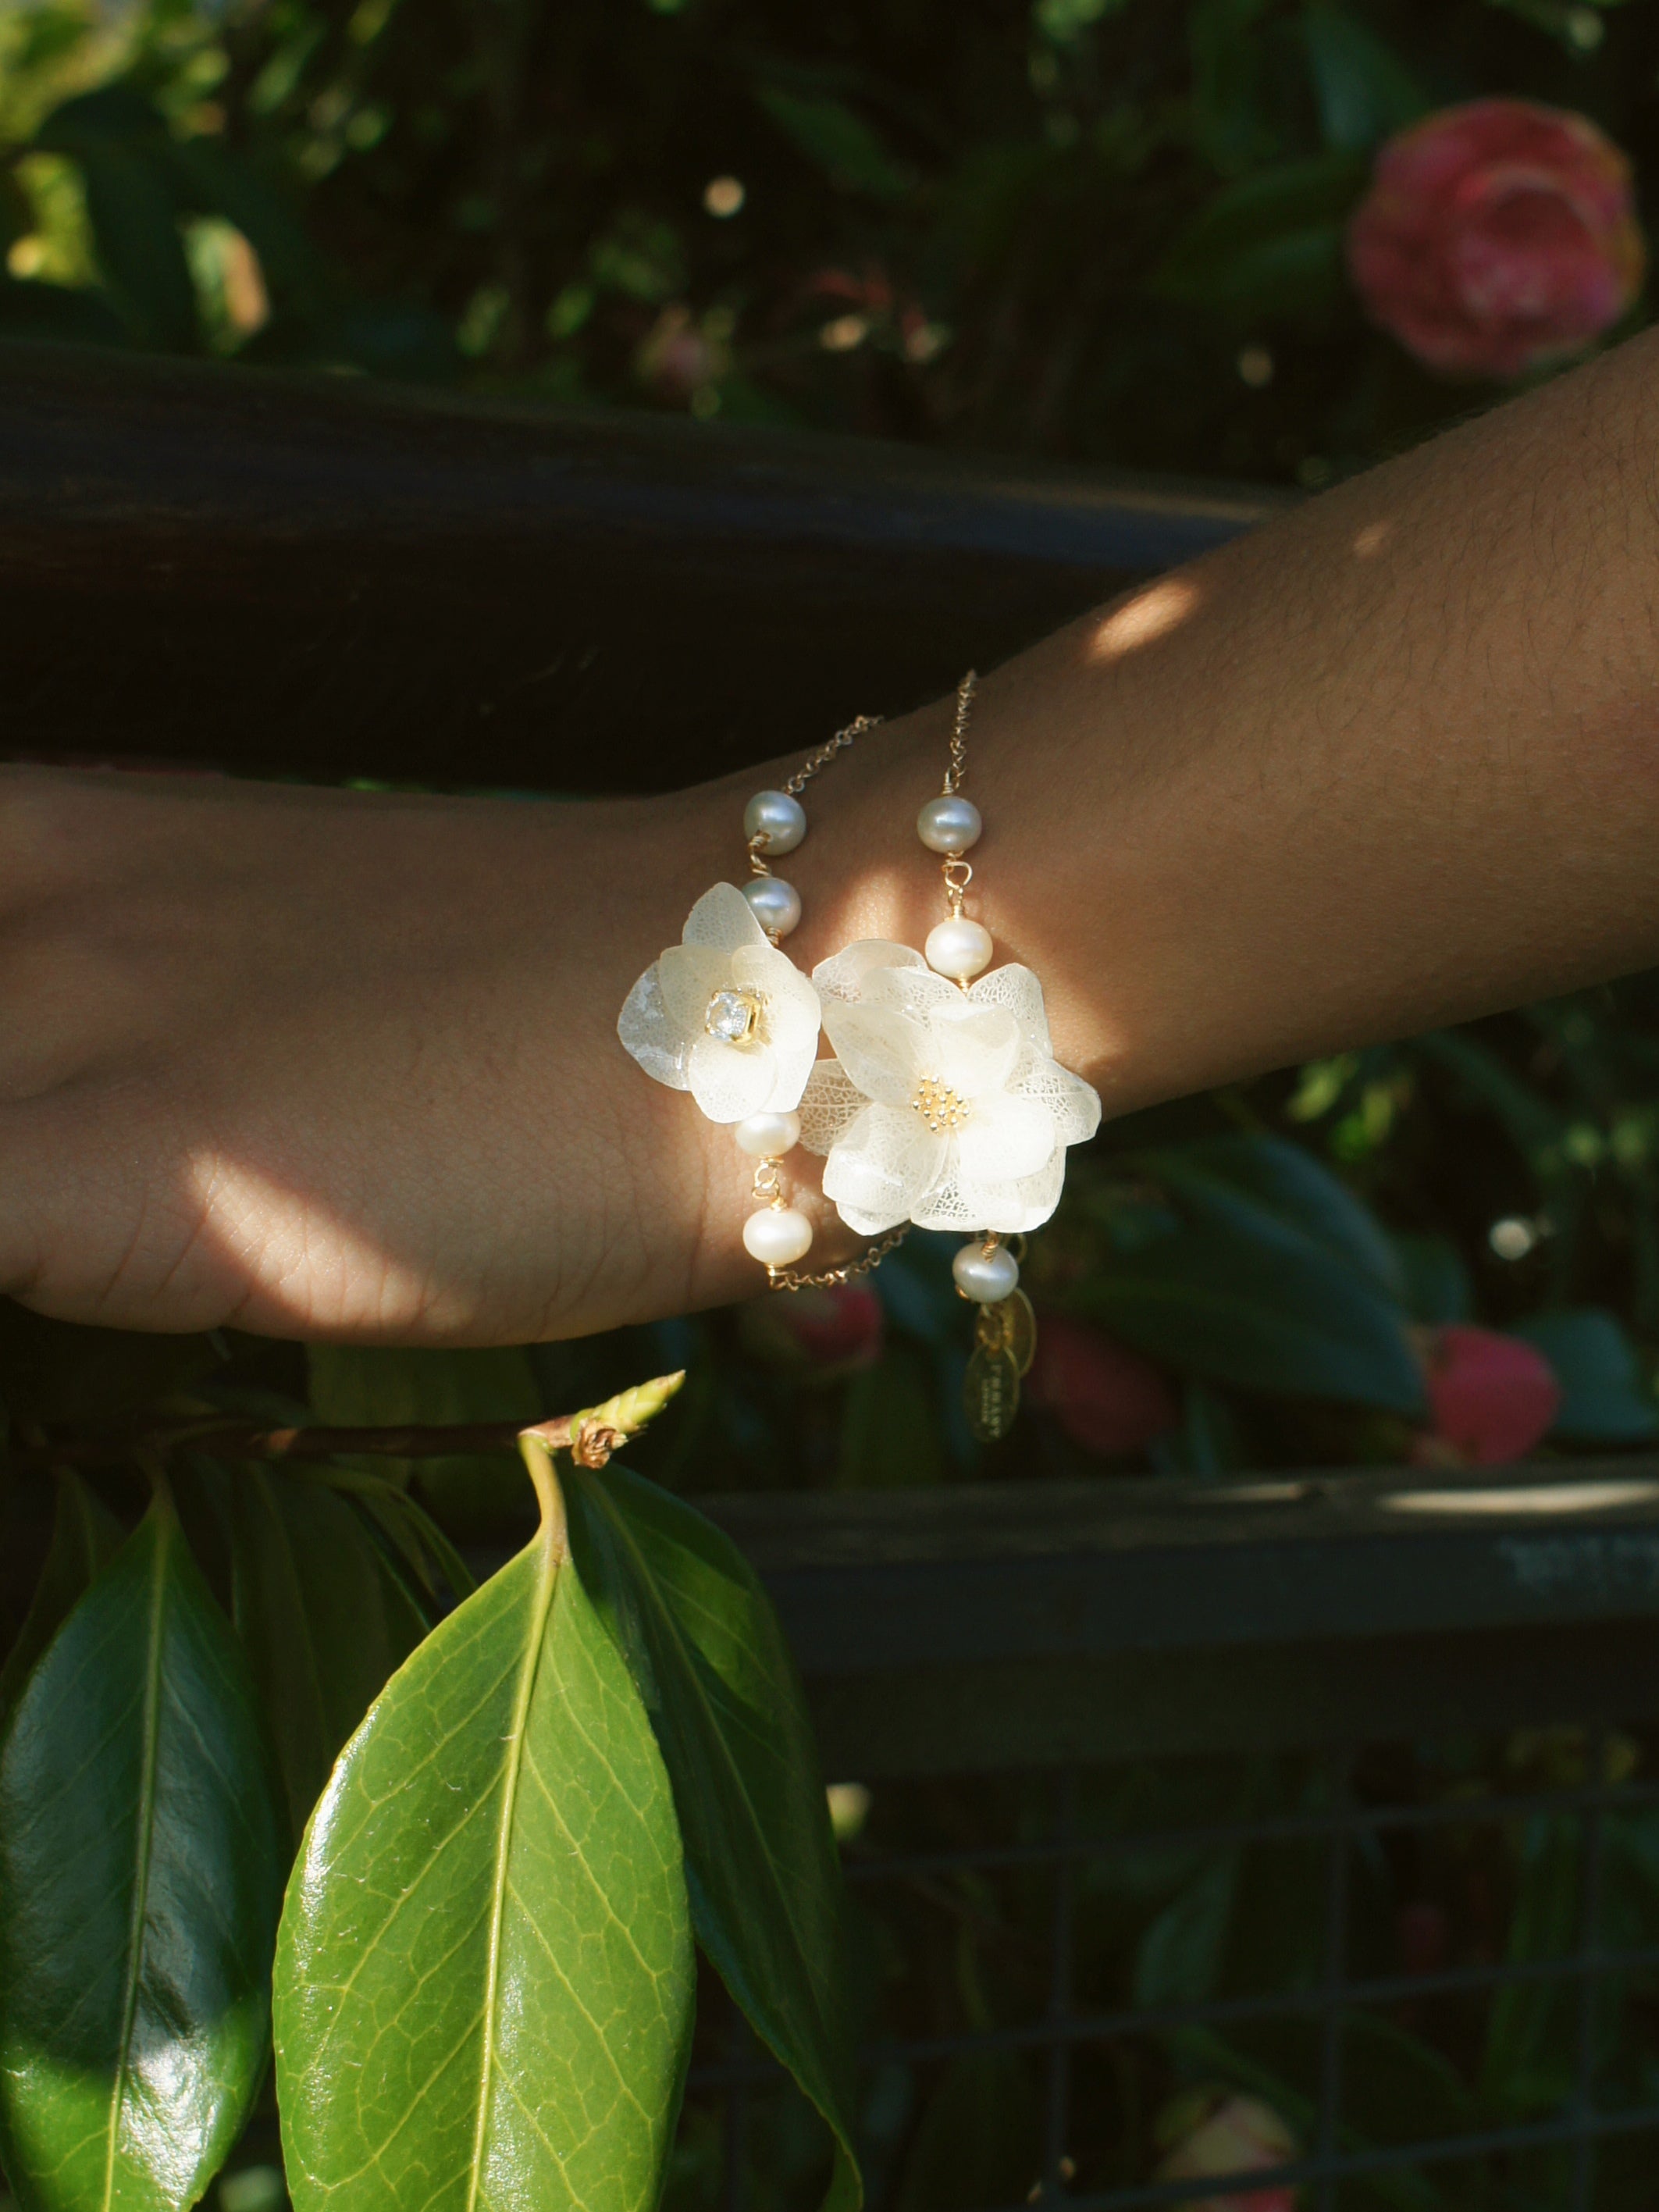 *REAL FLOWER* Verena Hydrangea and Freshwater Pearl Bracelet